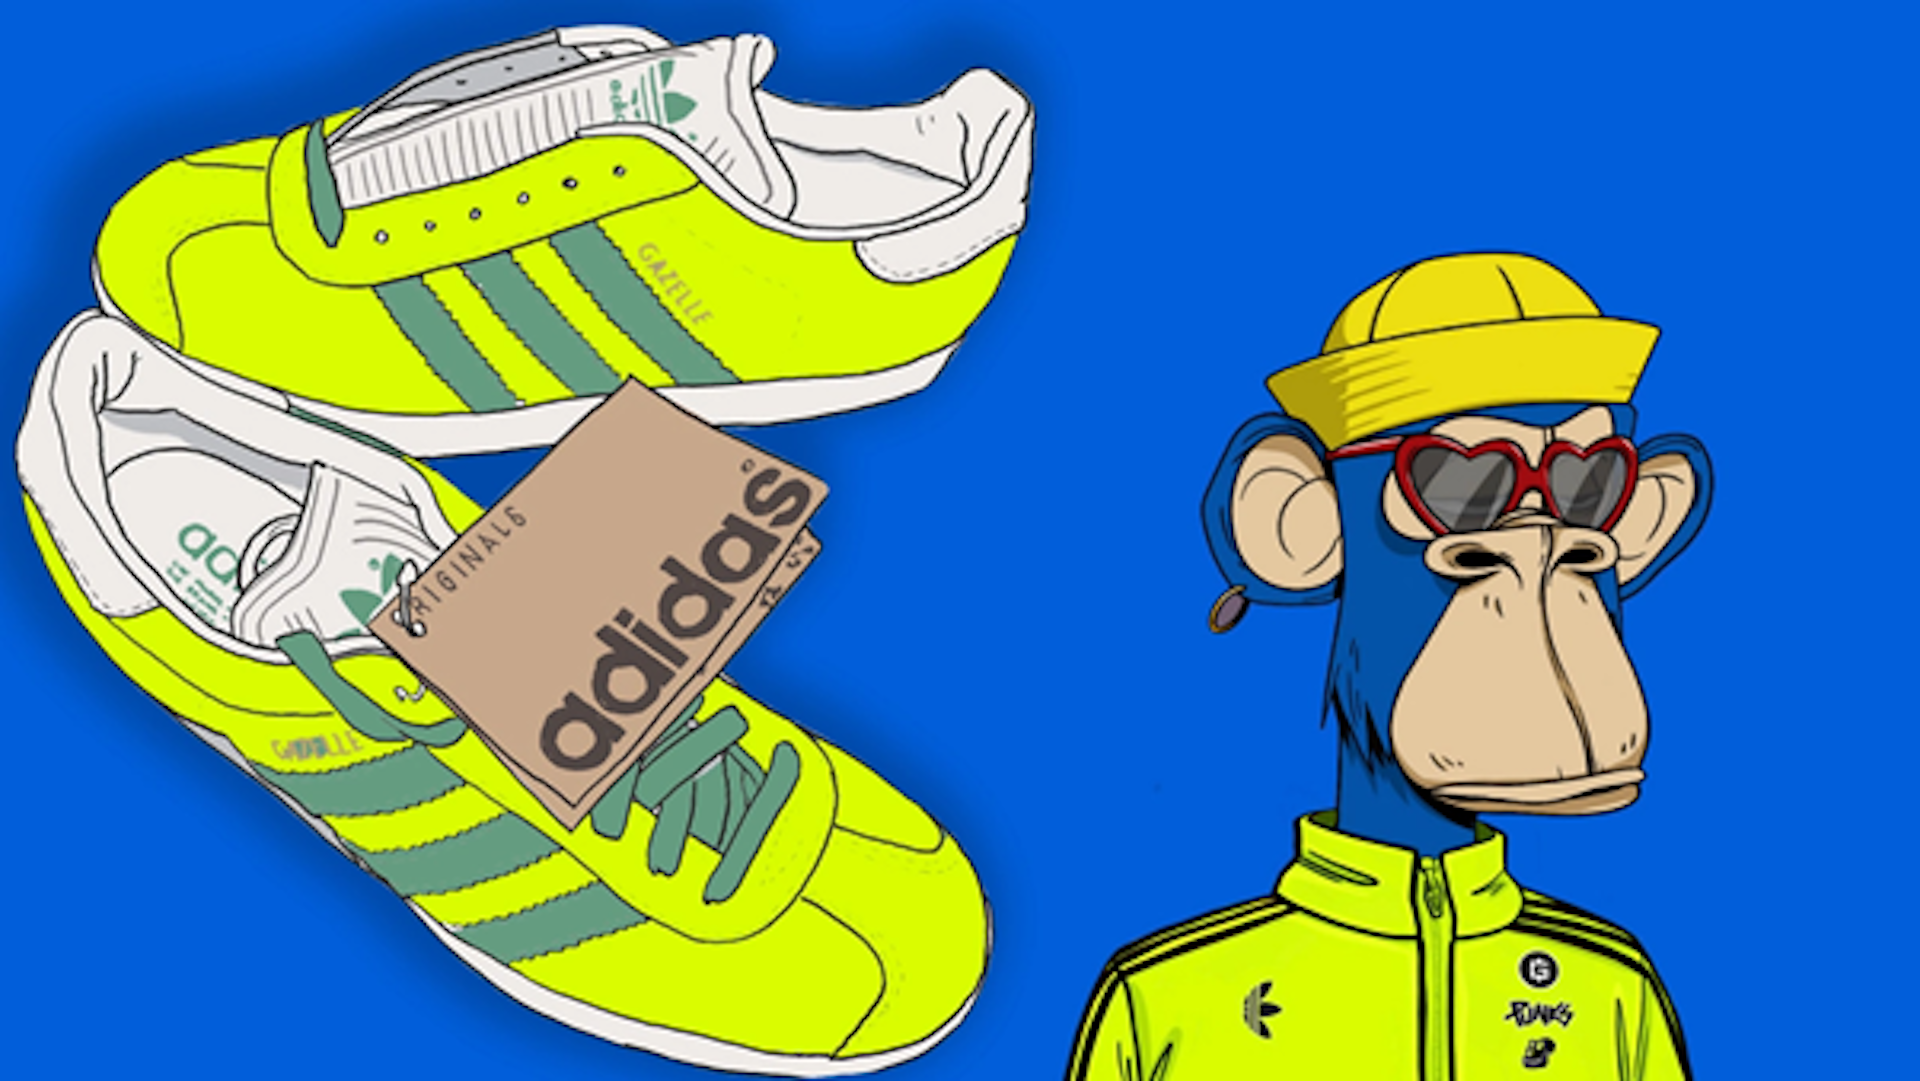 Adidas creates clothing for Roblox avatars, News